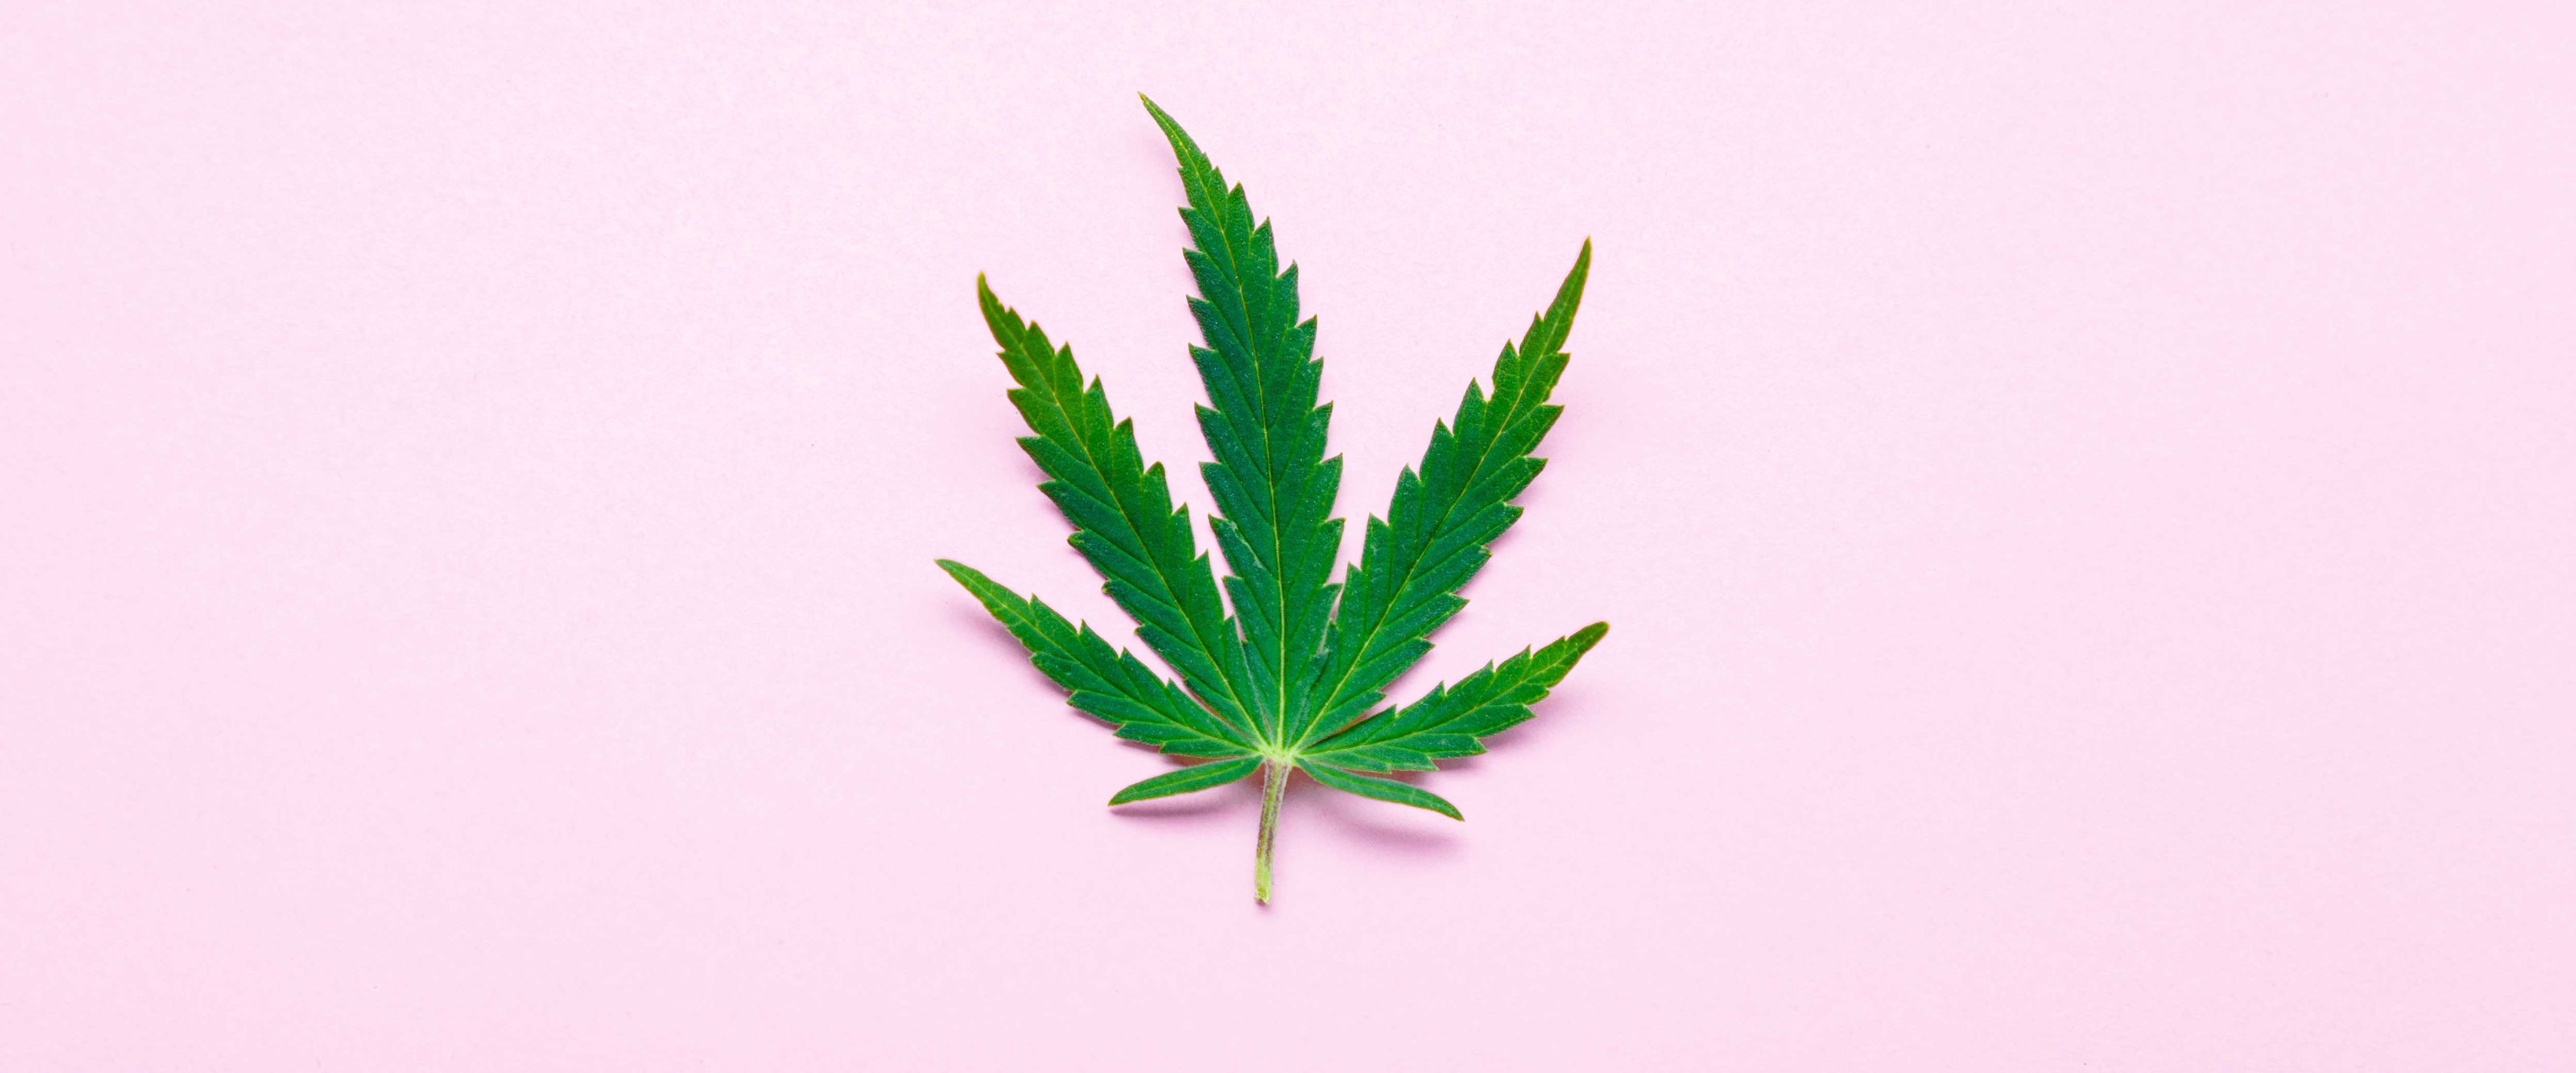 Marijuana leaf on pink background